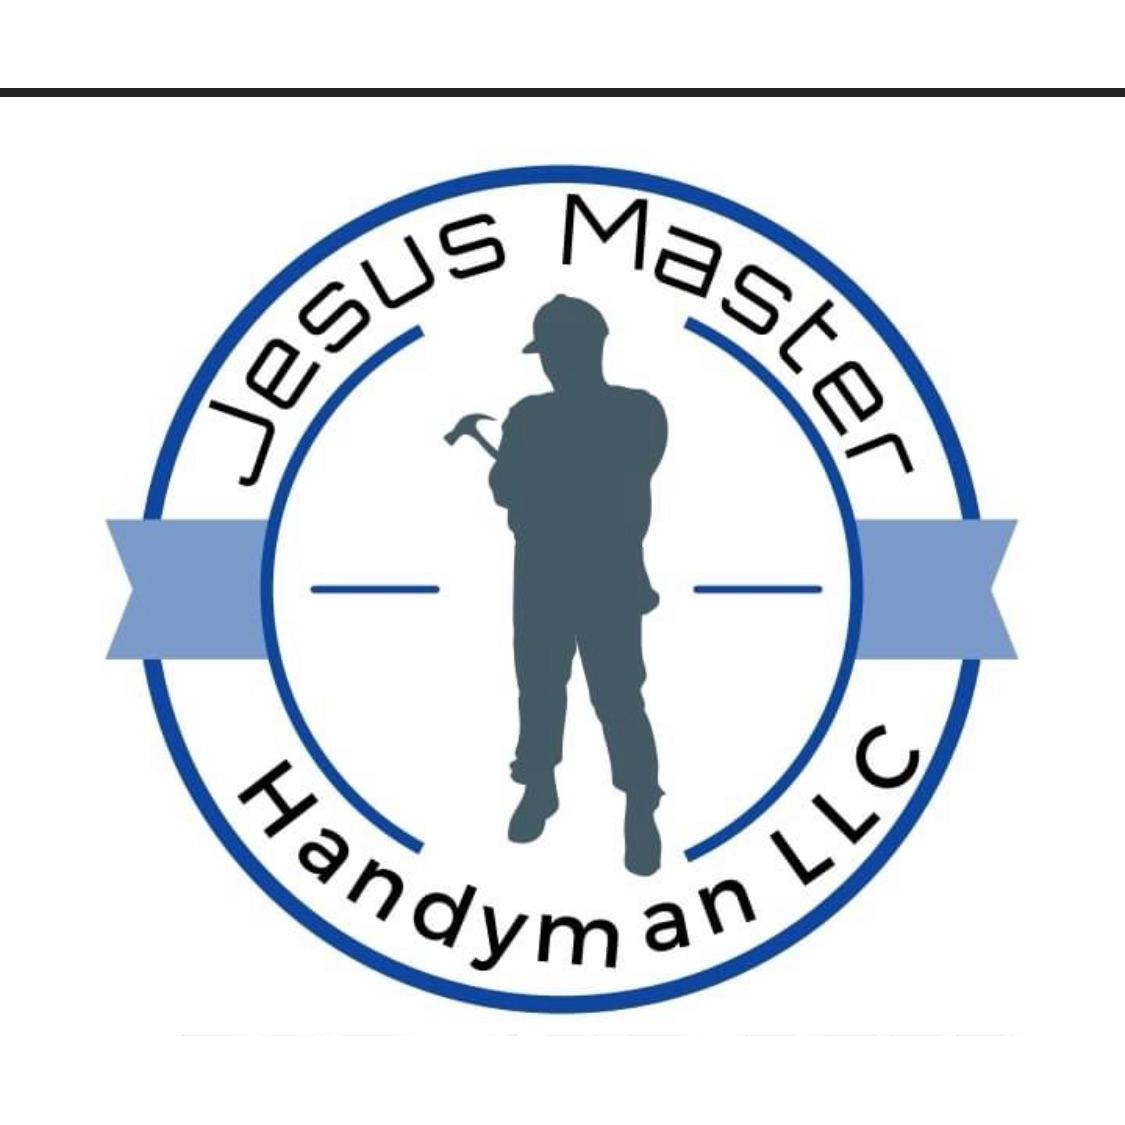 Jesus Master Handyman LLC